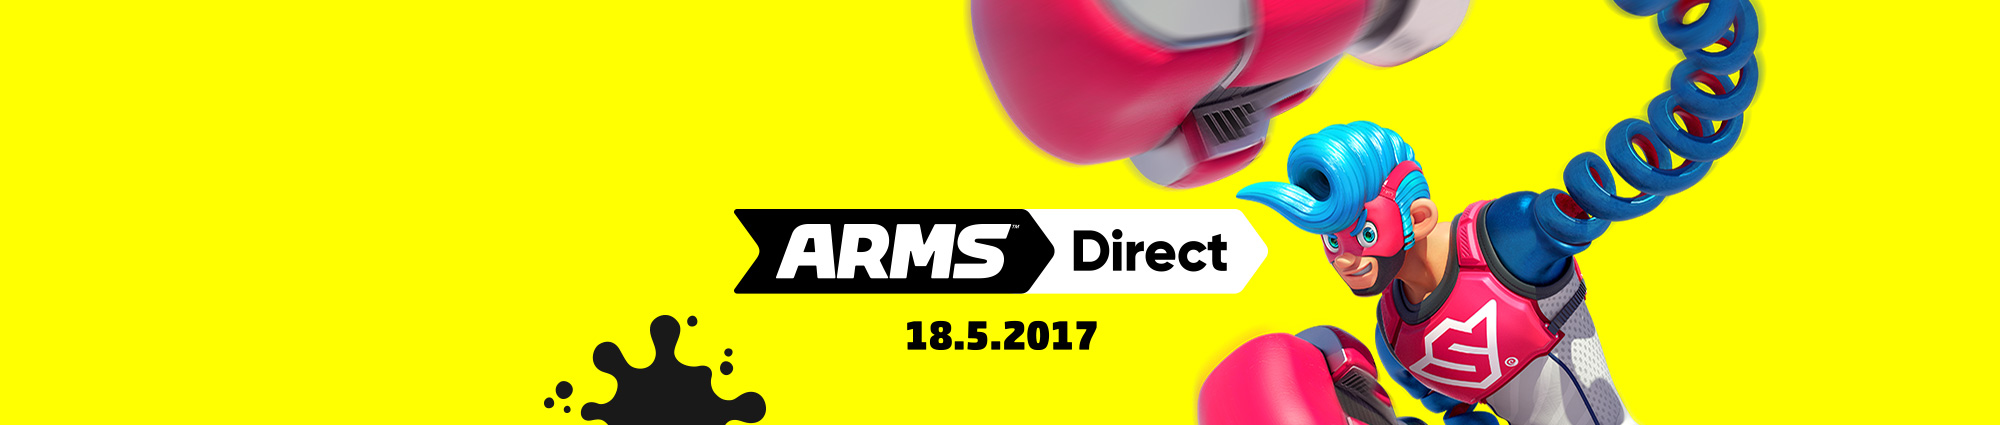 Nintendo Direct: nuovo appuntamento dedicato ad Arms